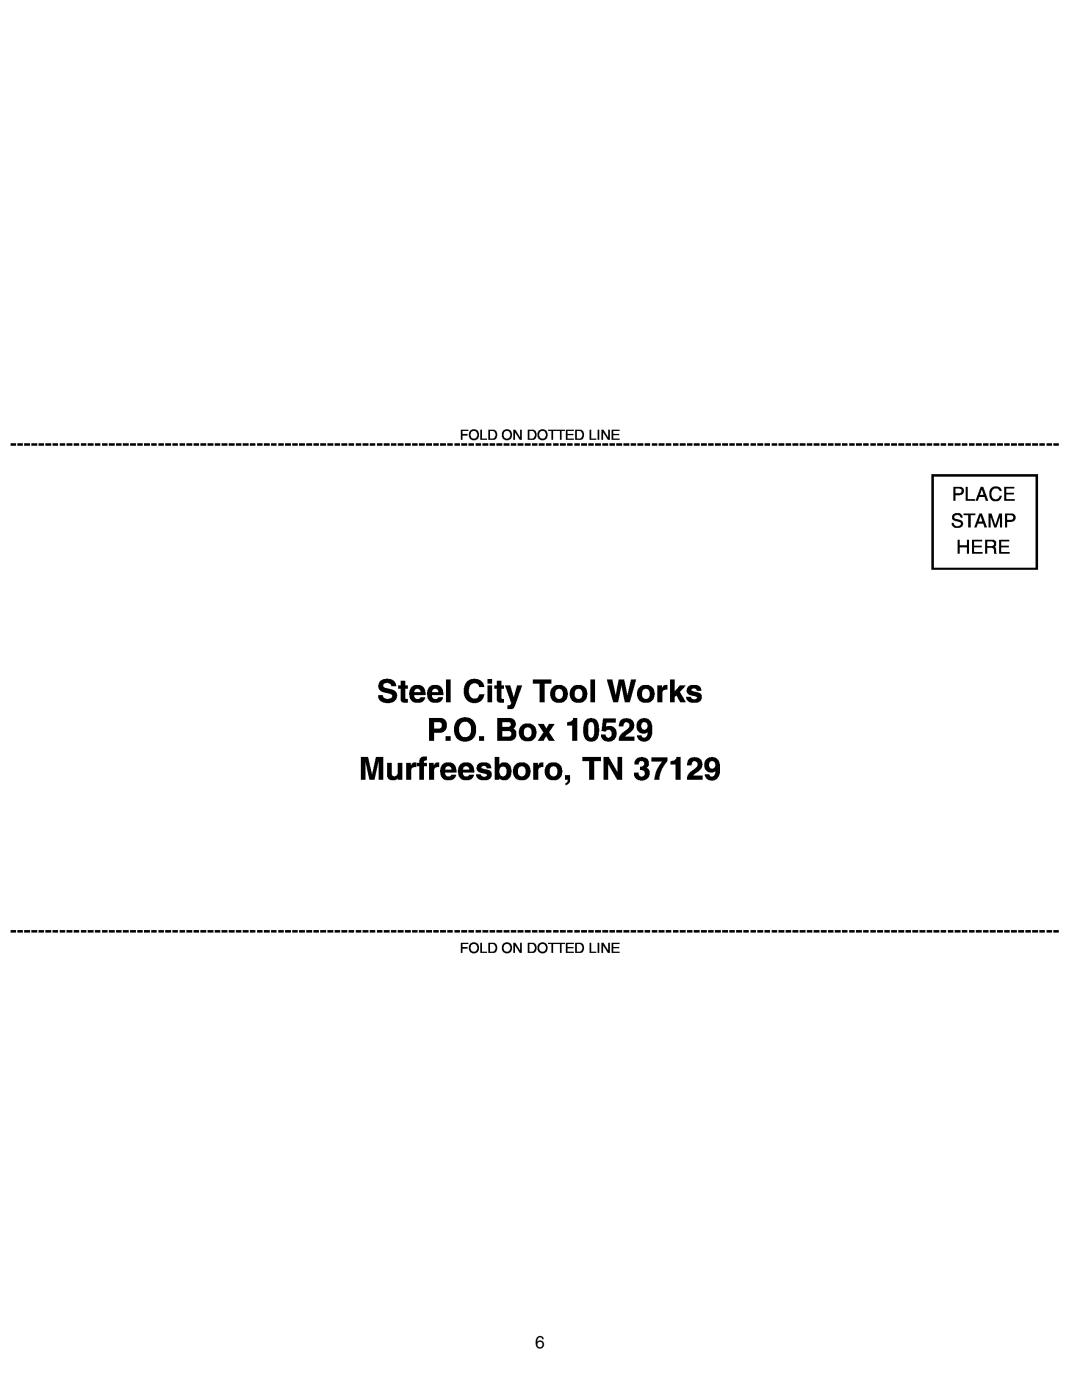 Craftsman 65100 user manual Steel City Tool Works P.O. Box Murfreesboro, TN, Place Stamp Here 